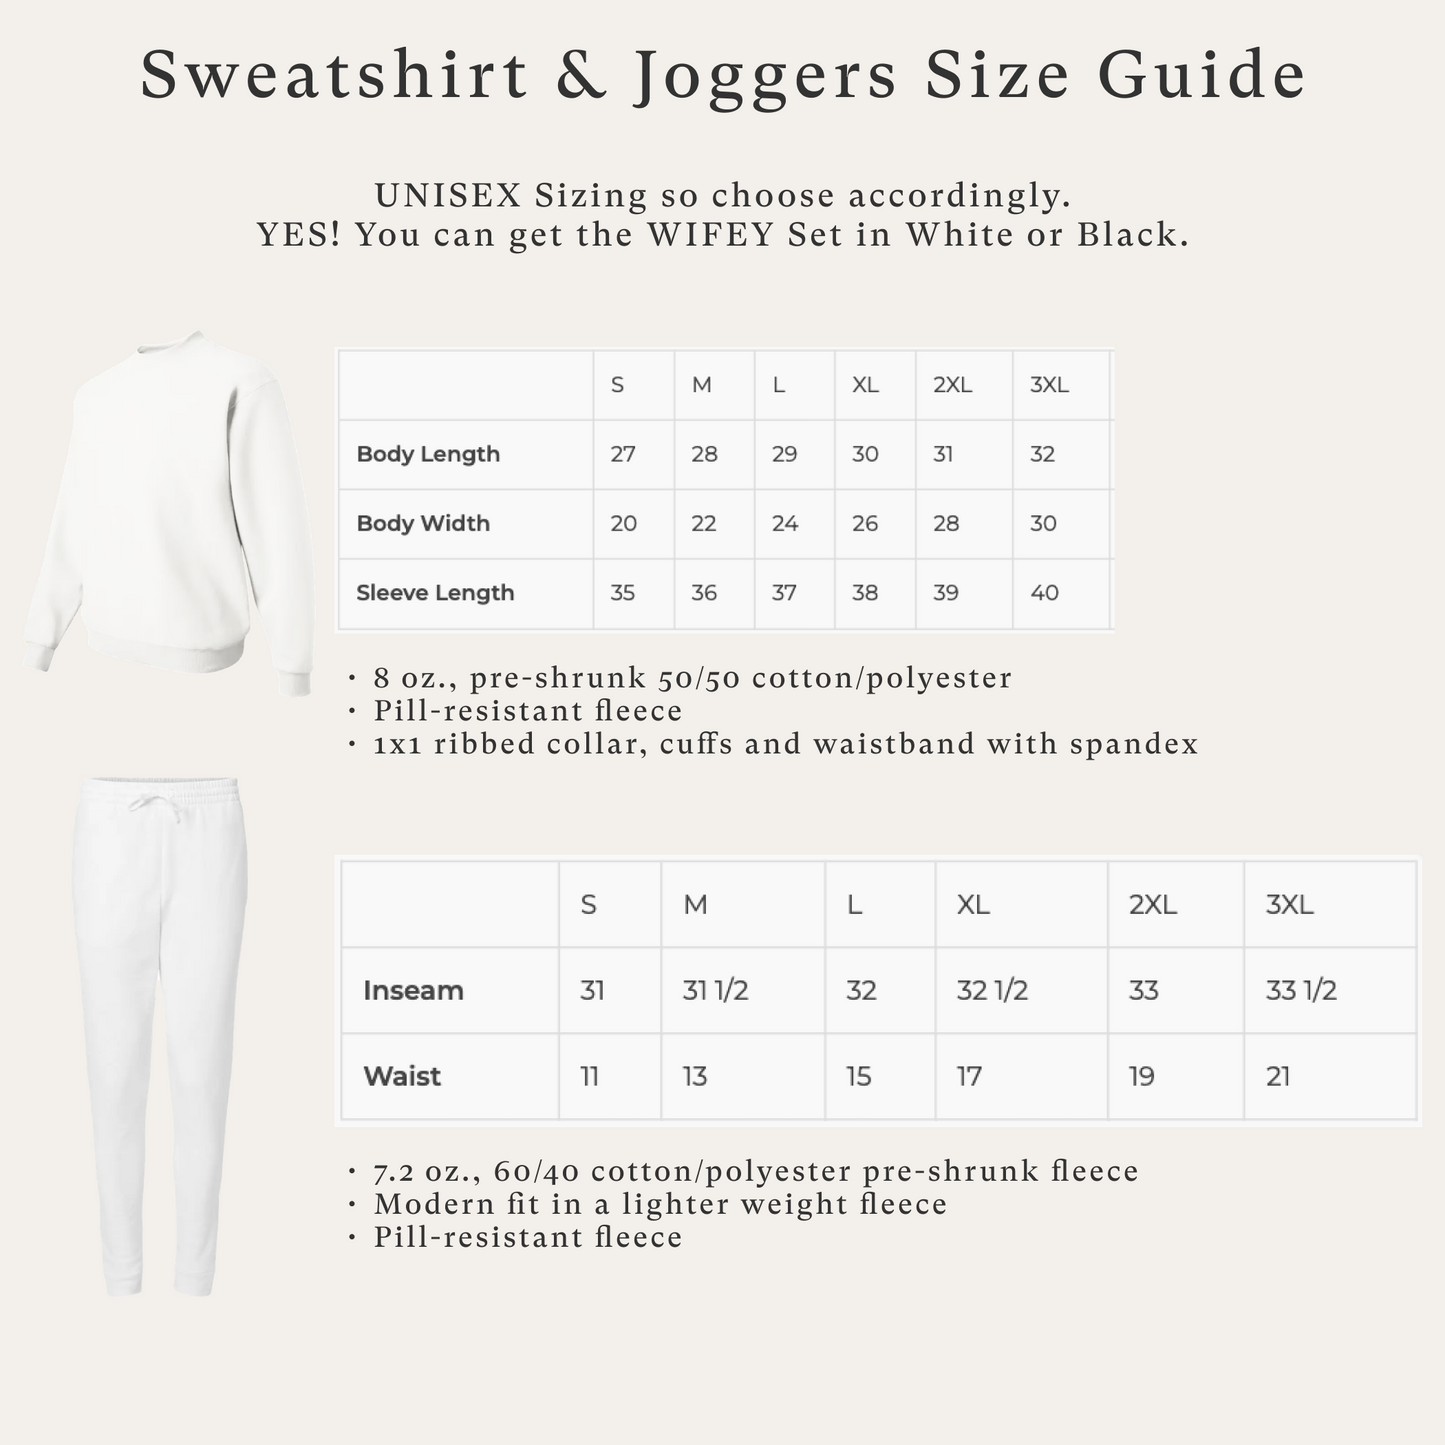 Personalized WIFEY / HUBBY Sweatshirt & Joggers Set